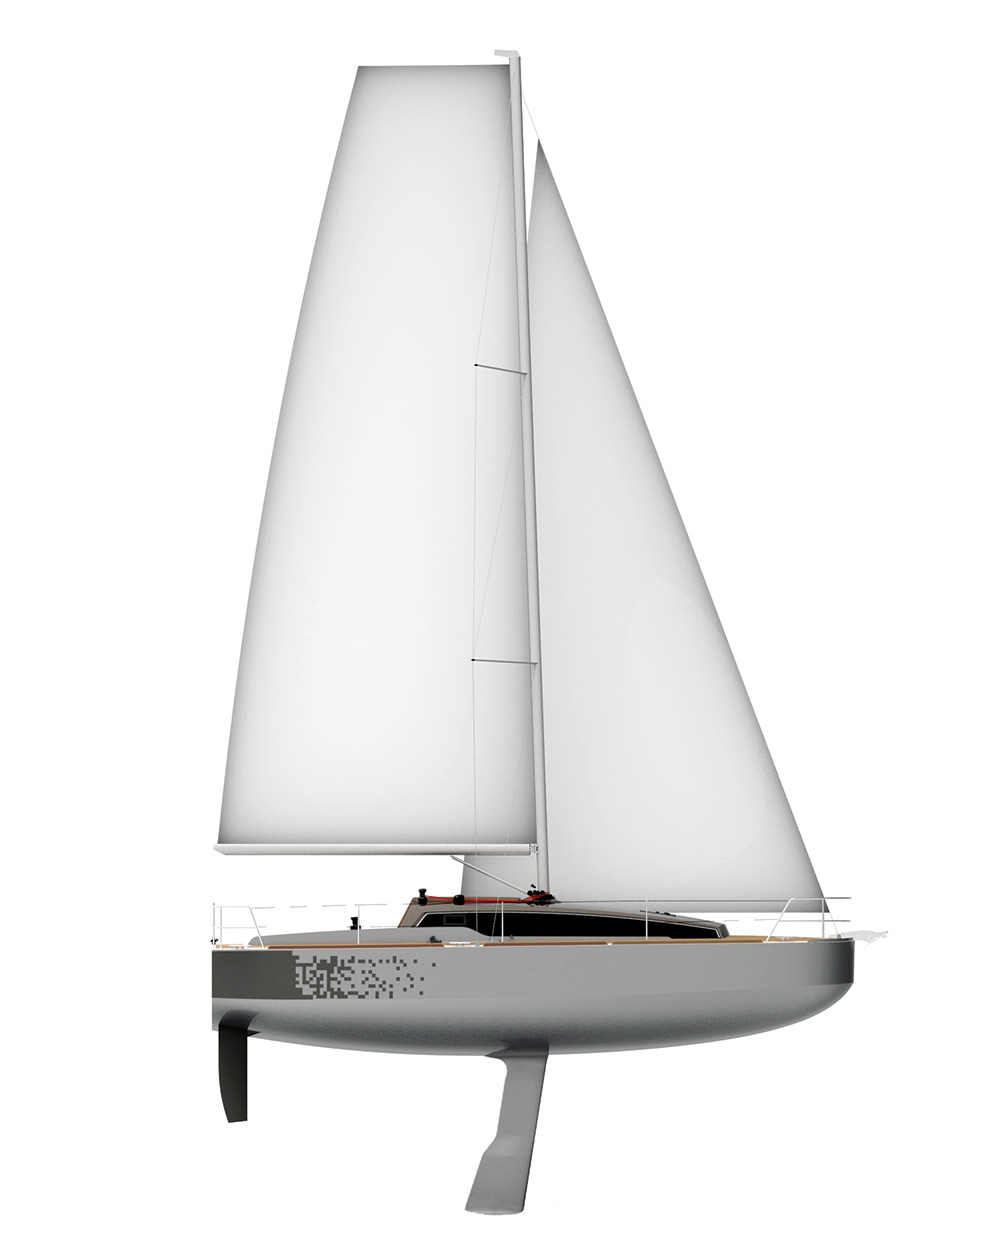 revolution 29 sailboat for sale